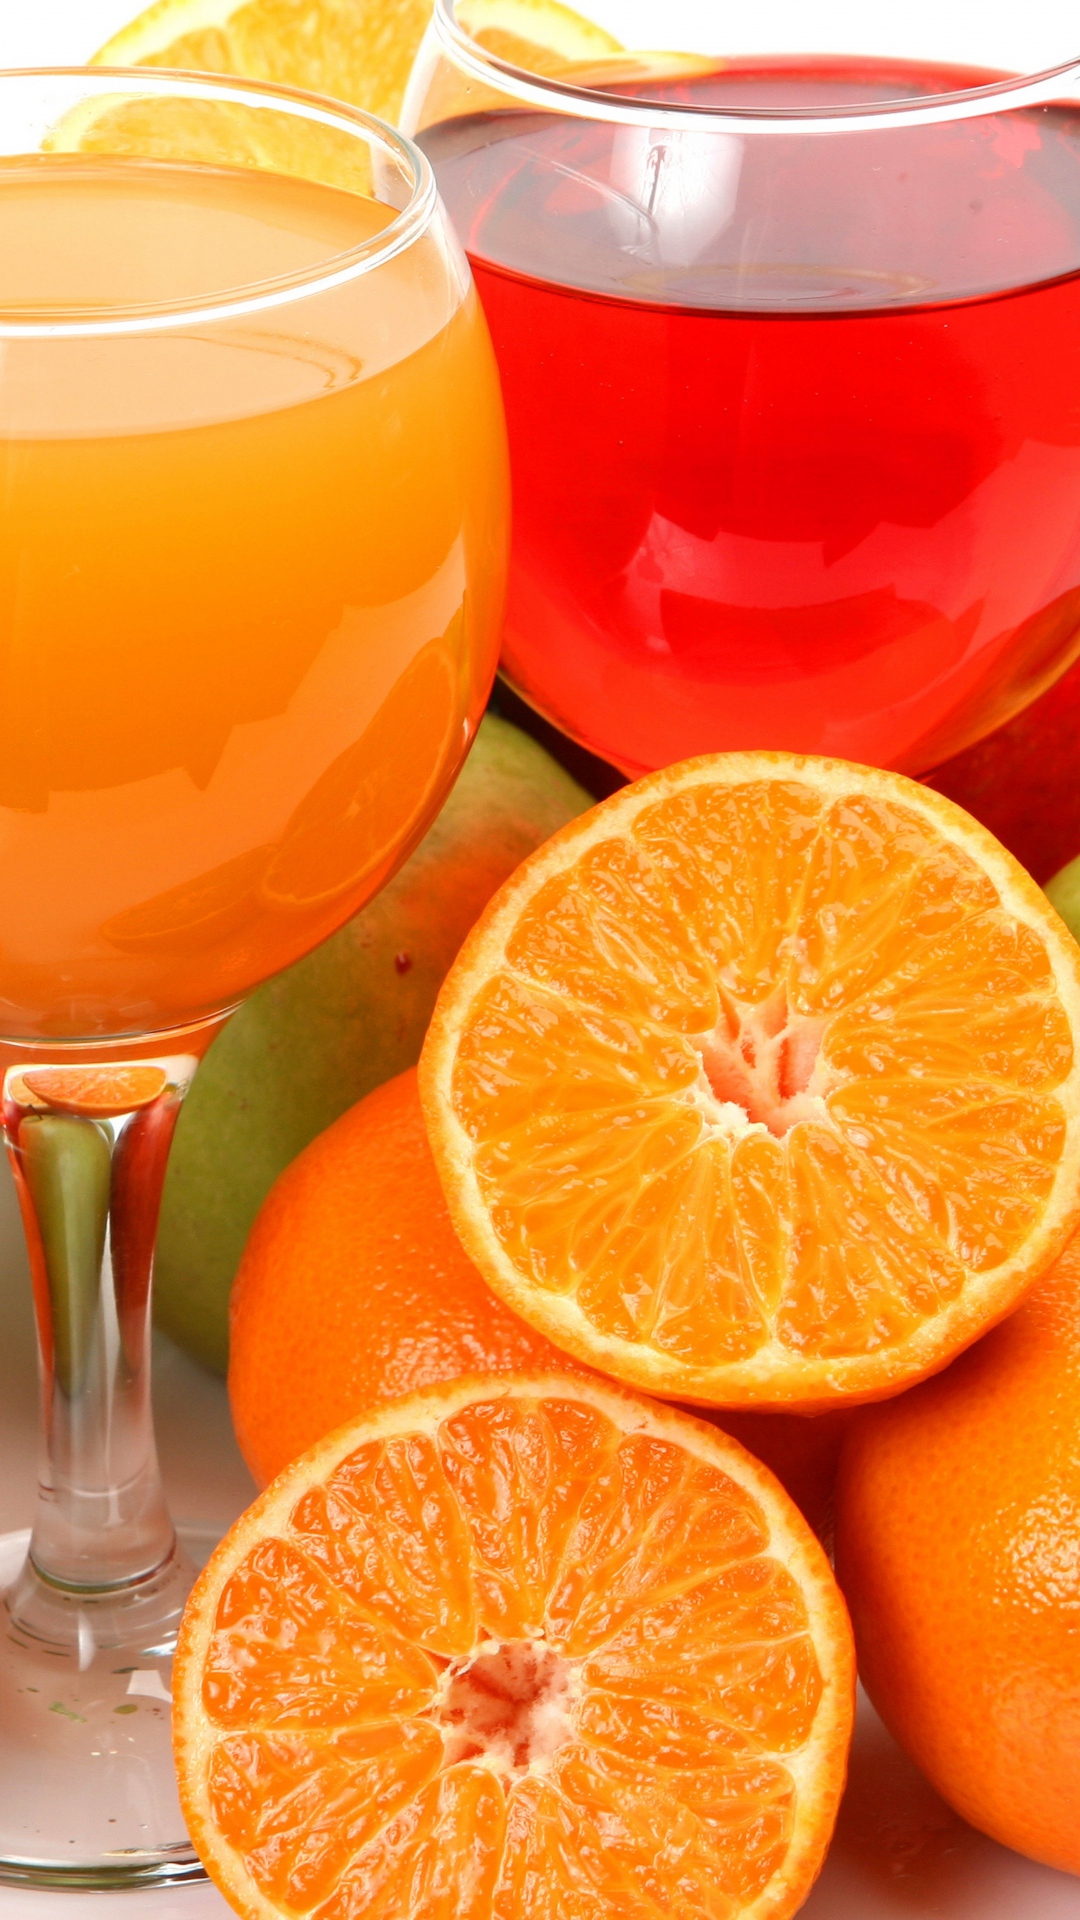 Grapefruit Juice Glass HD Wallpaper Background Image